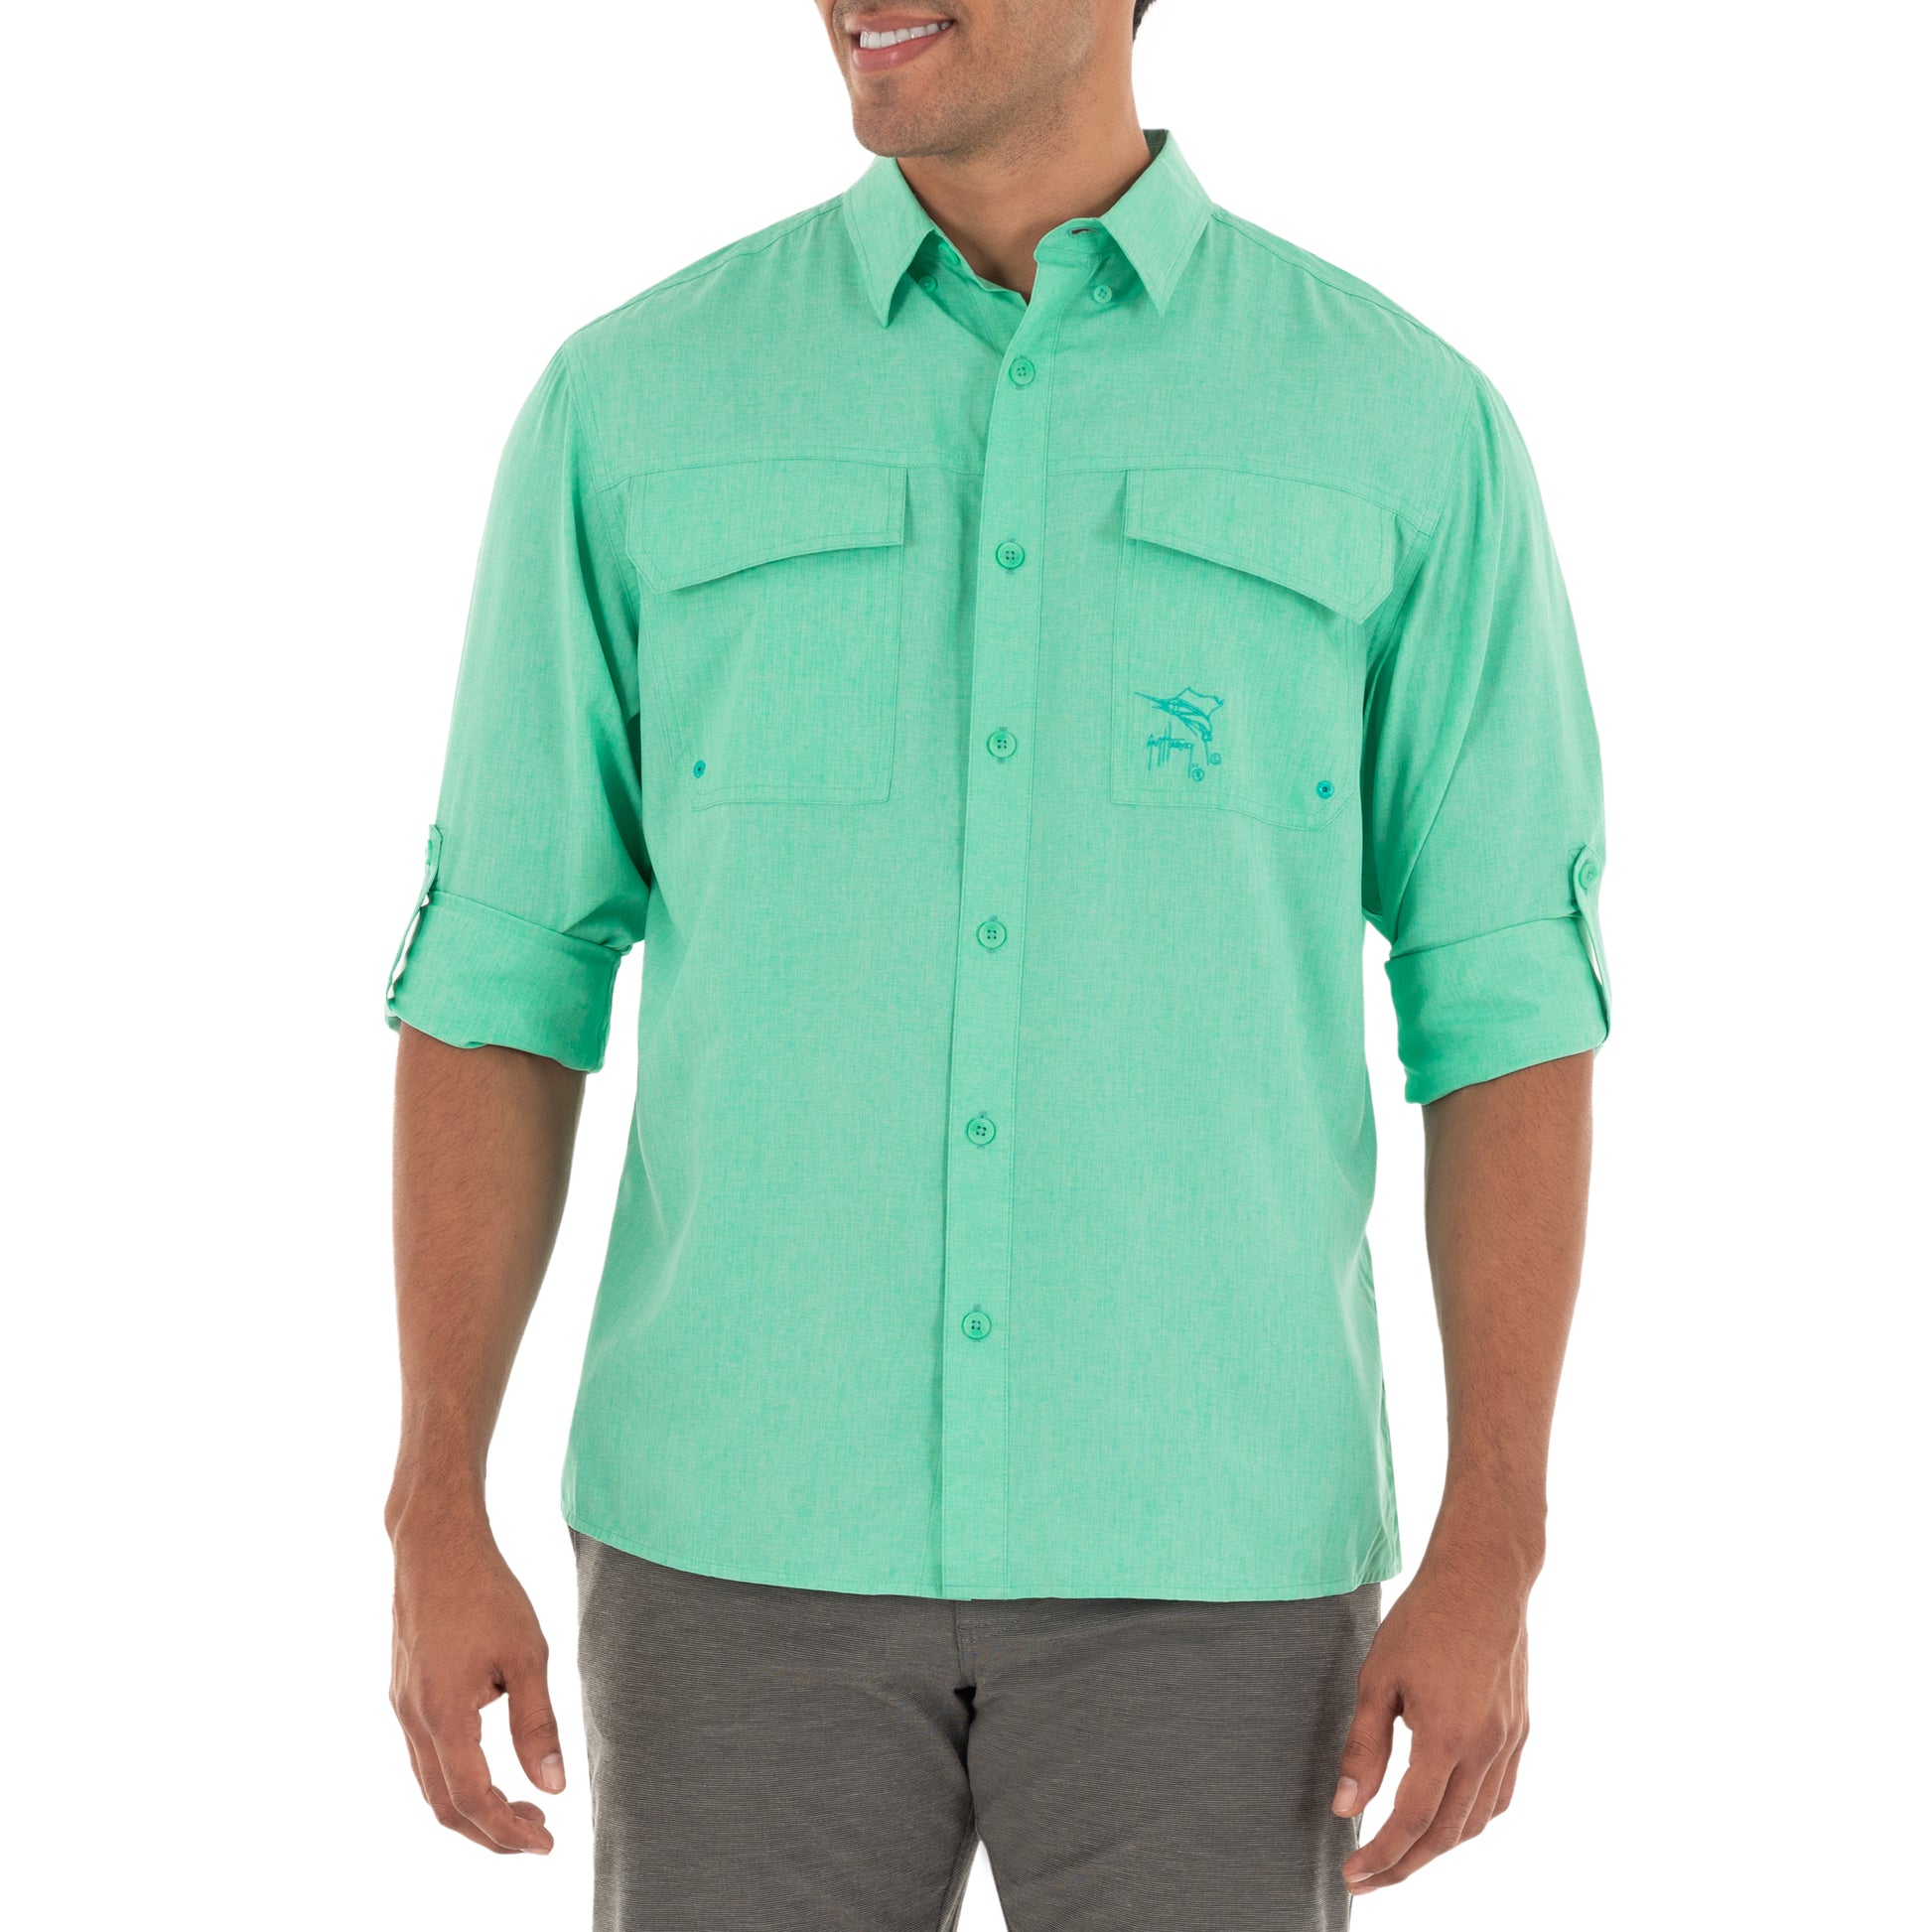 FoxFire Mens Fishing Shirt Vented Roll Tab Sleeve Olive Green Long Sleeve XL